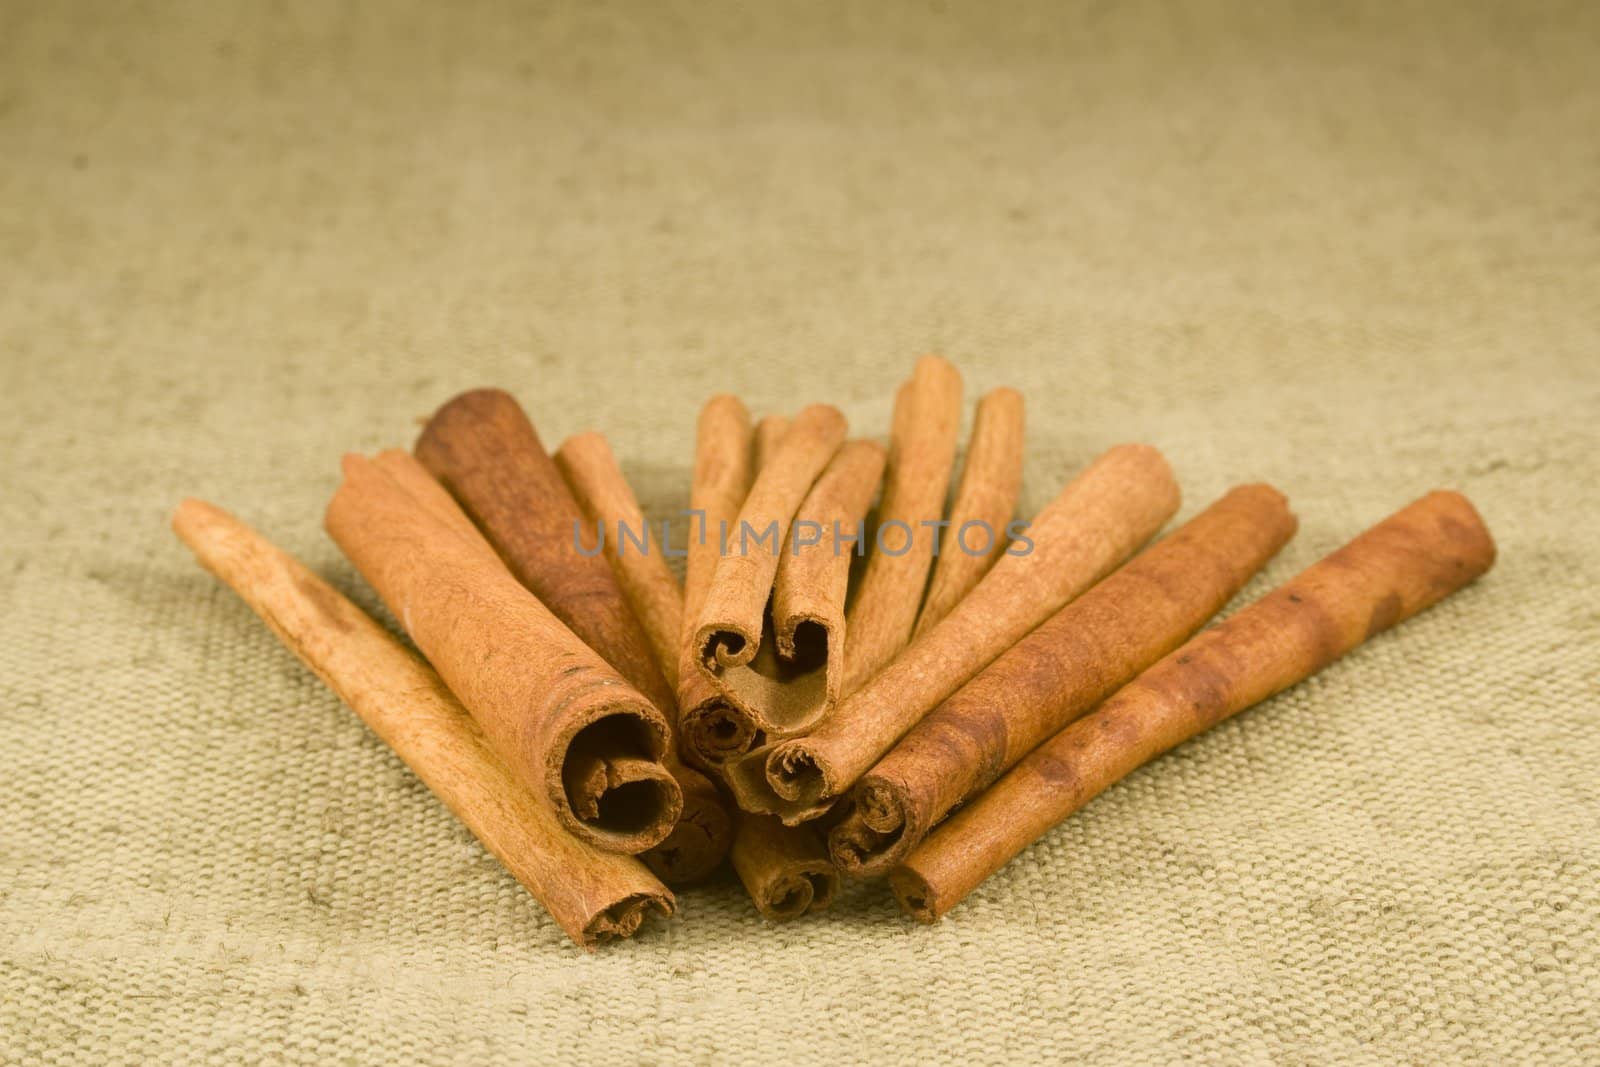 Cinnamon sticks on burlap